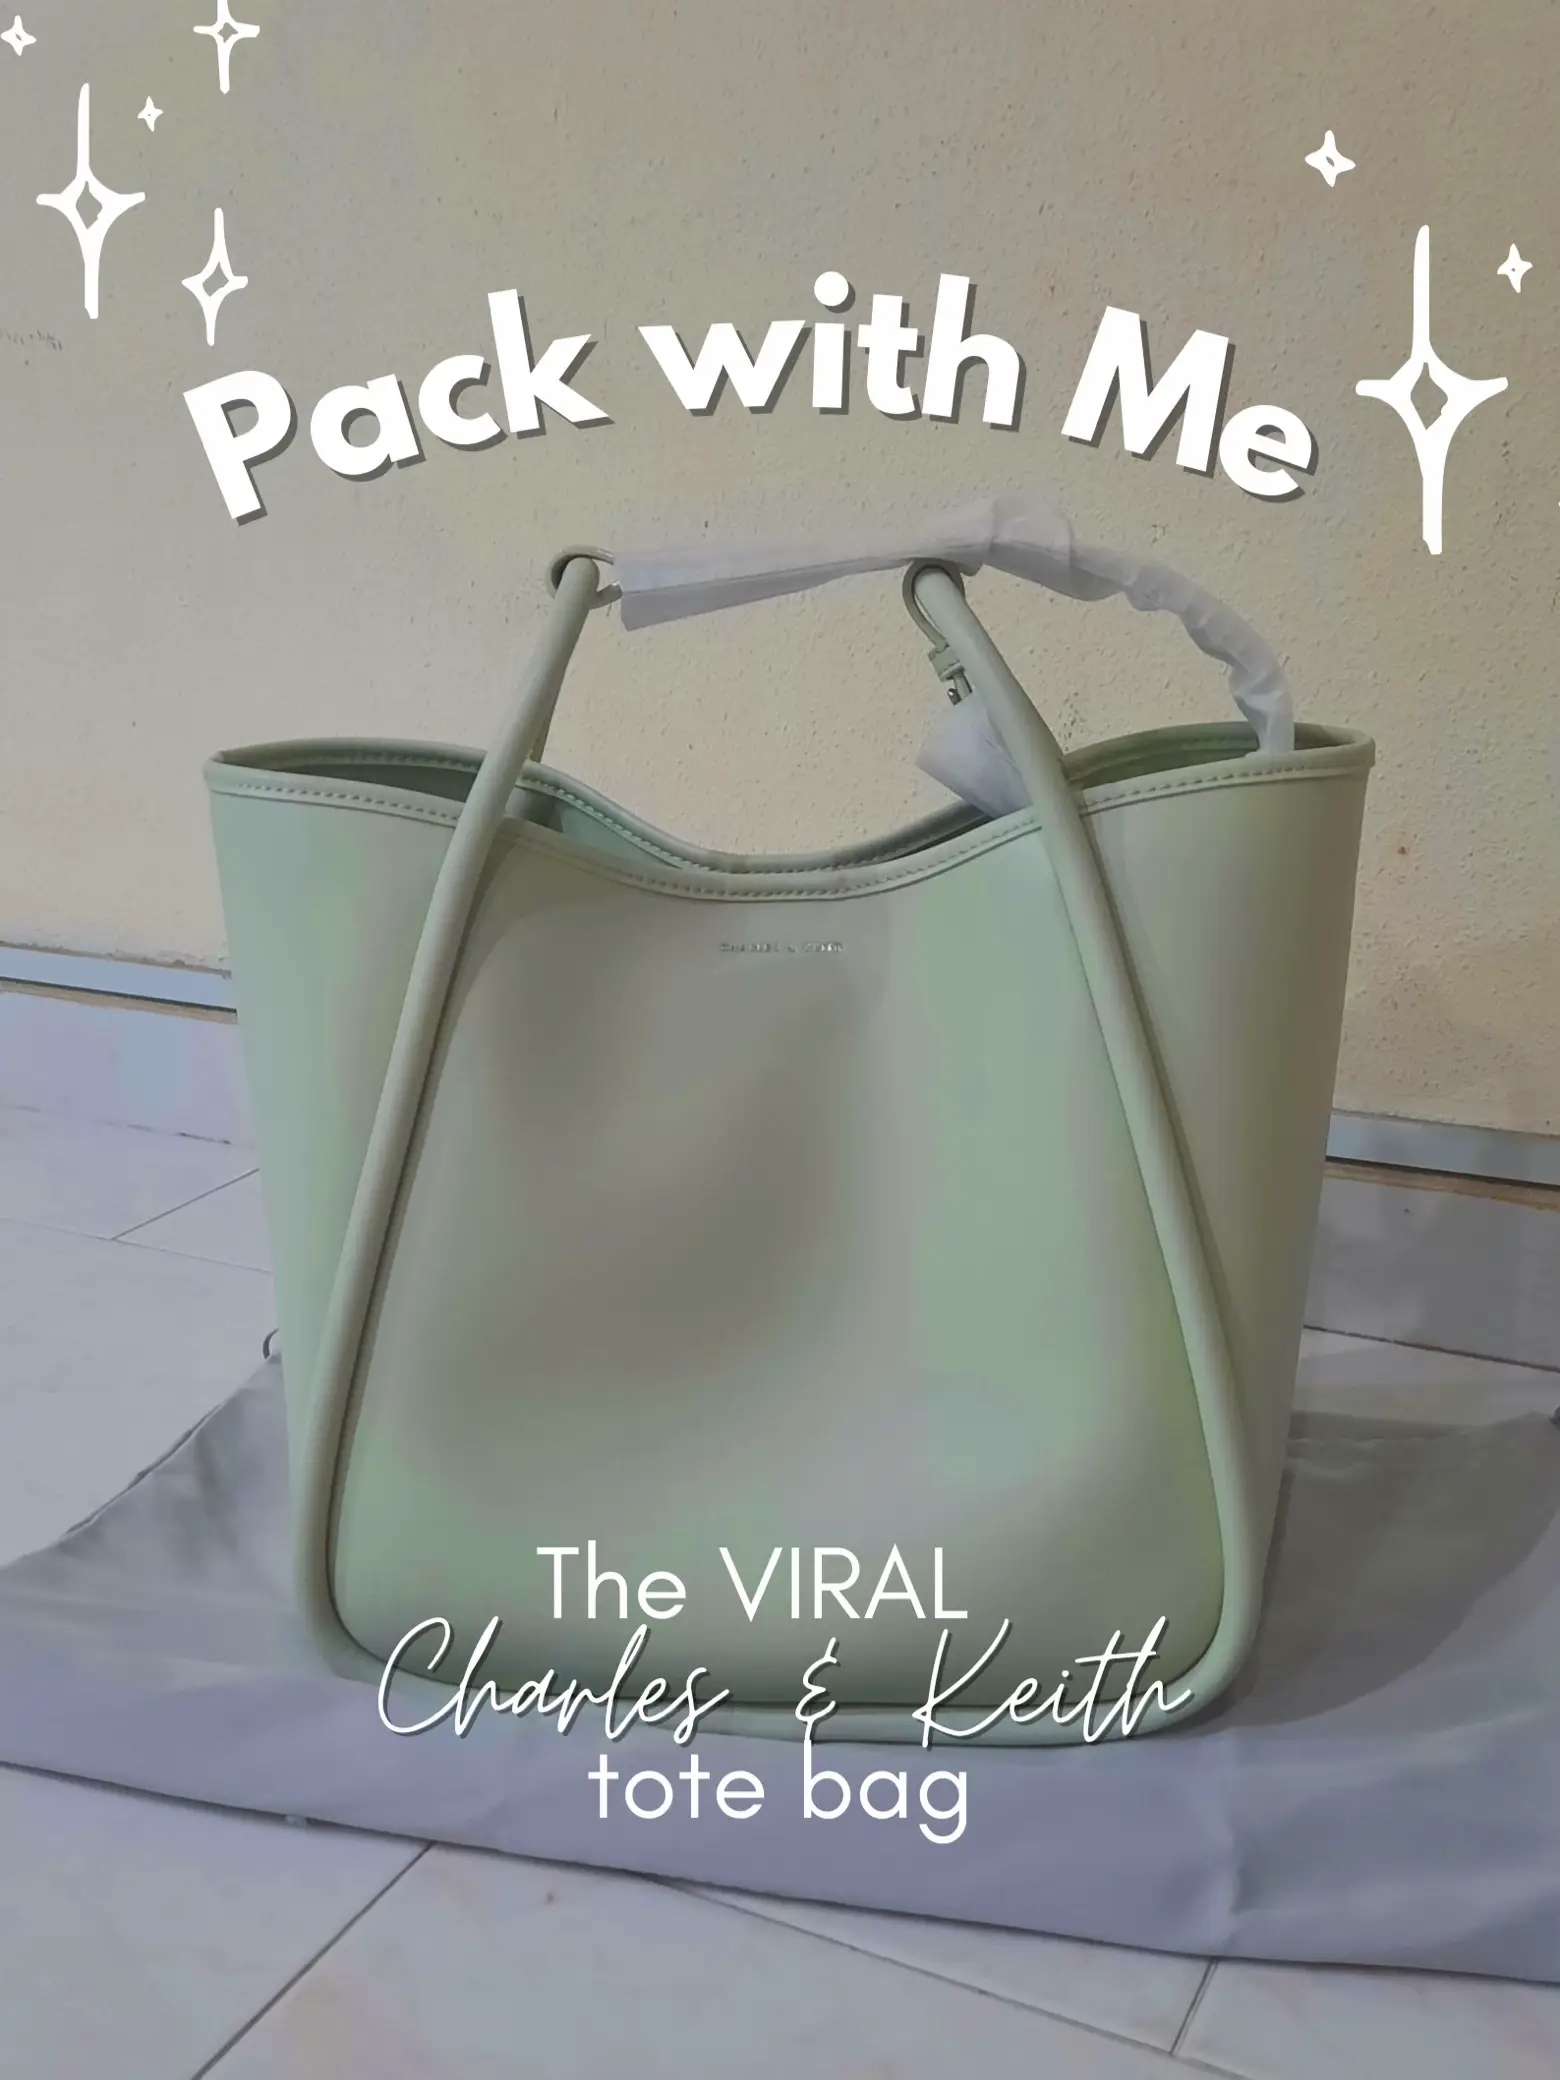 the viral Charles & Keith tote bag review!